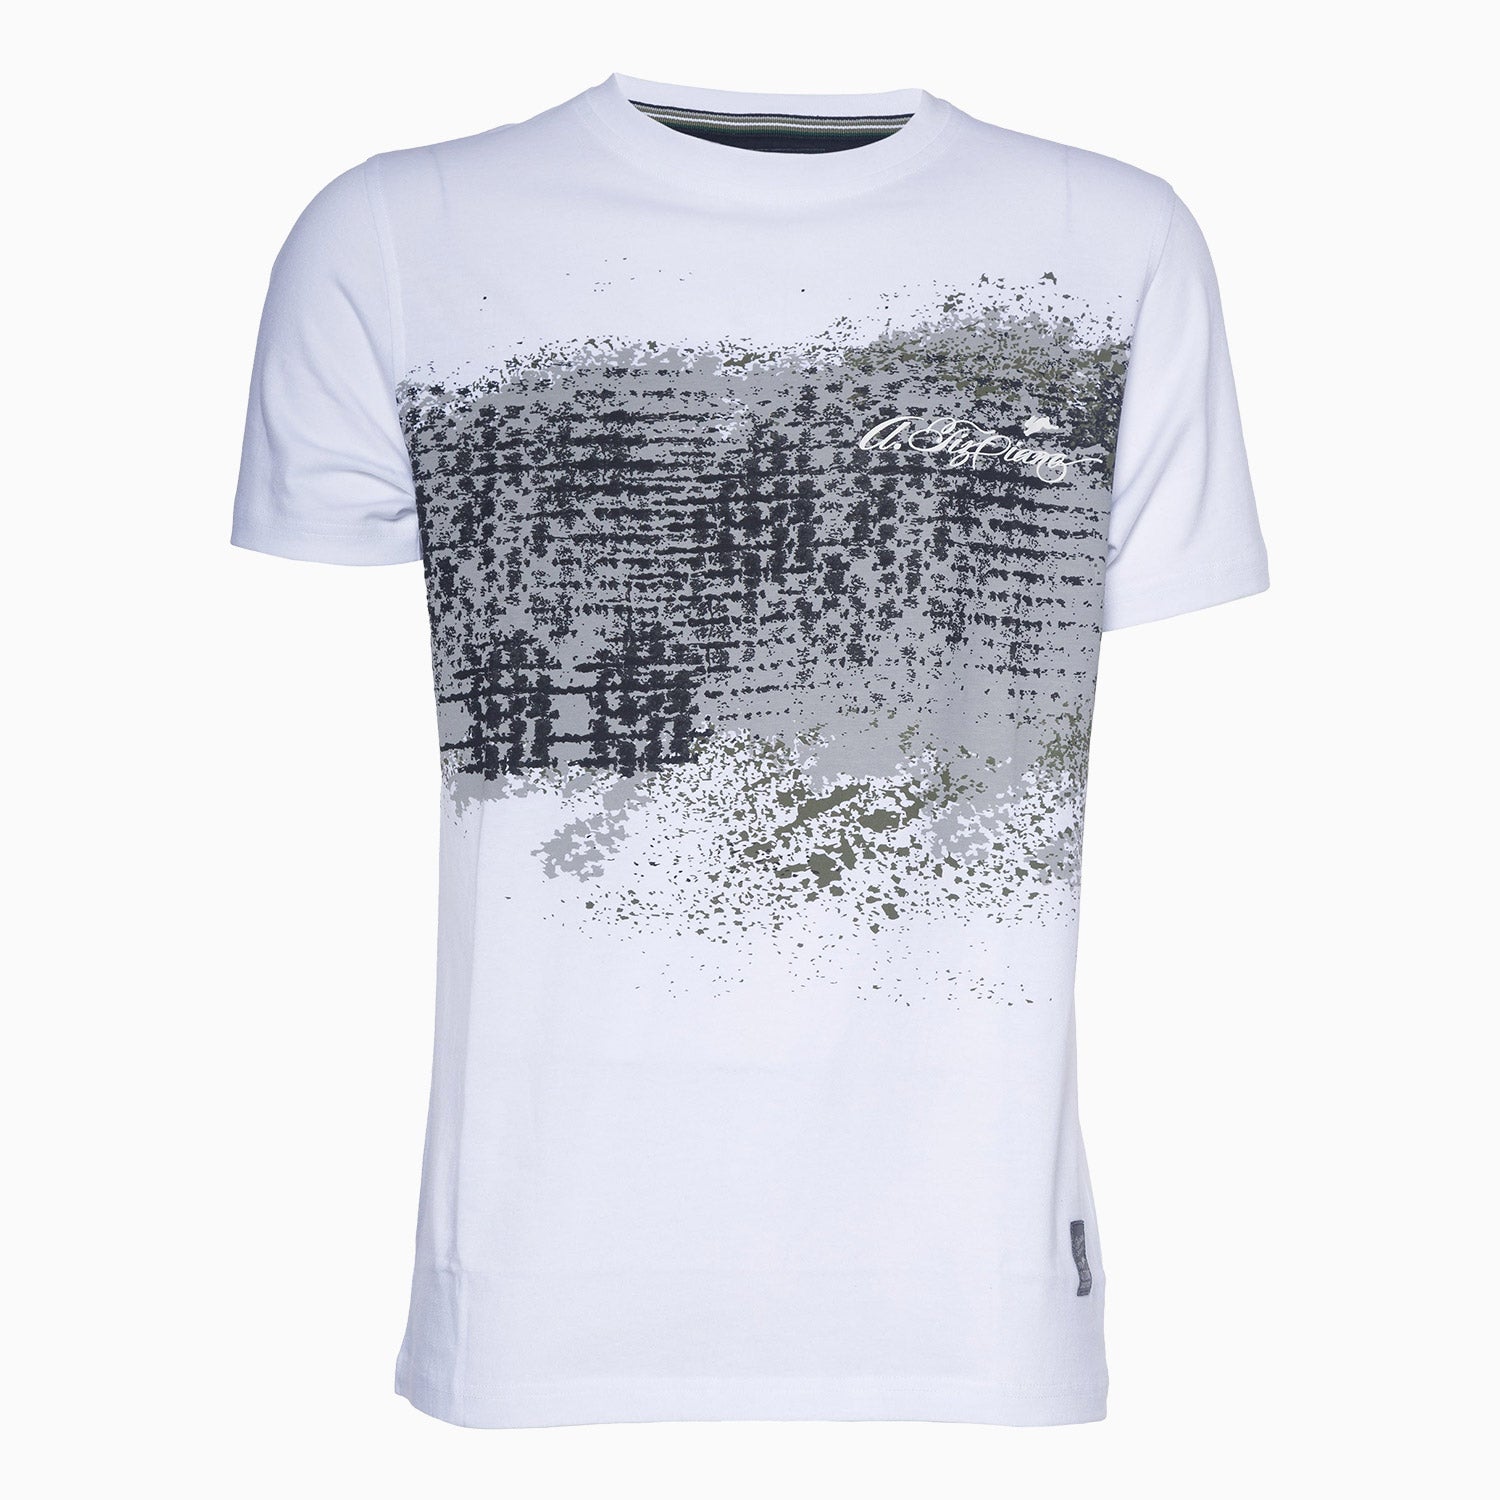 a-tiziano-mens-harlan-graphic-print-short-sleeve-t-shirt-41atm4310-wht